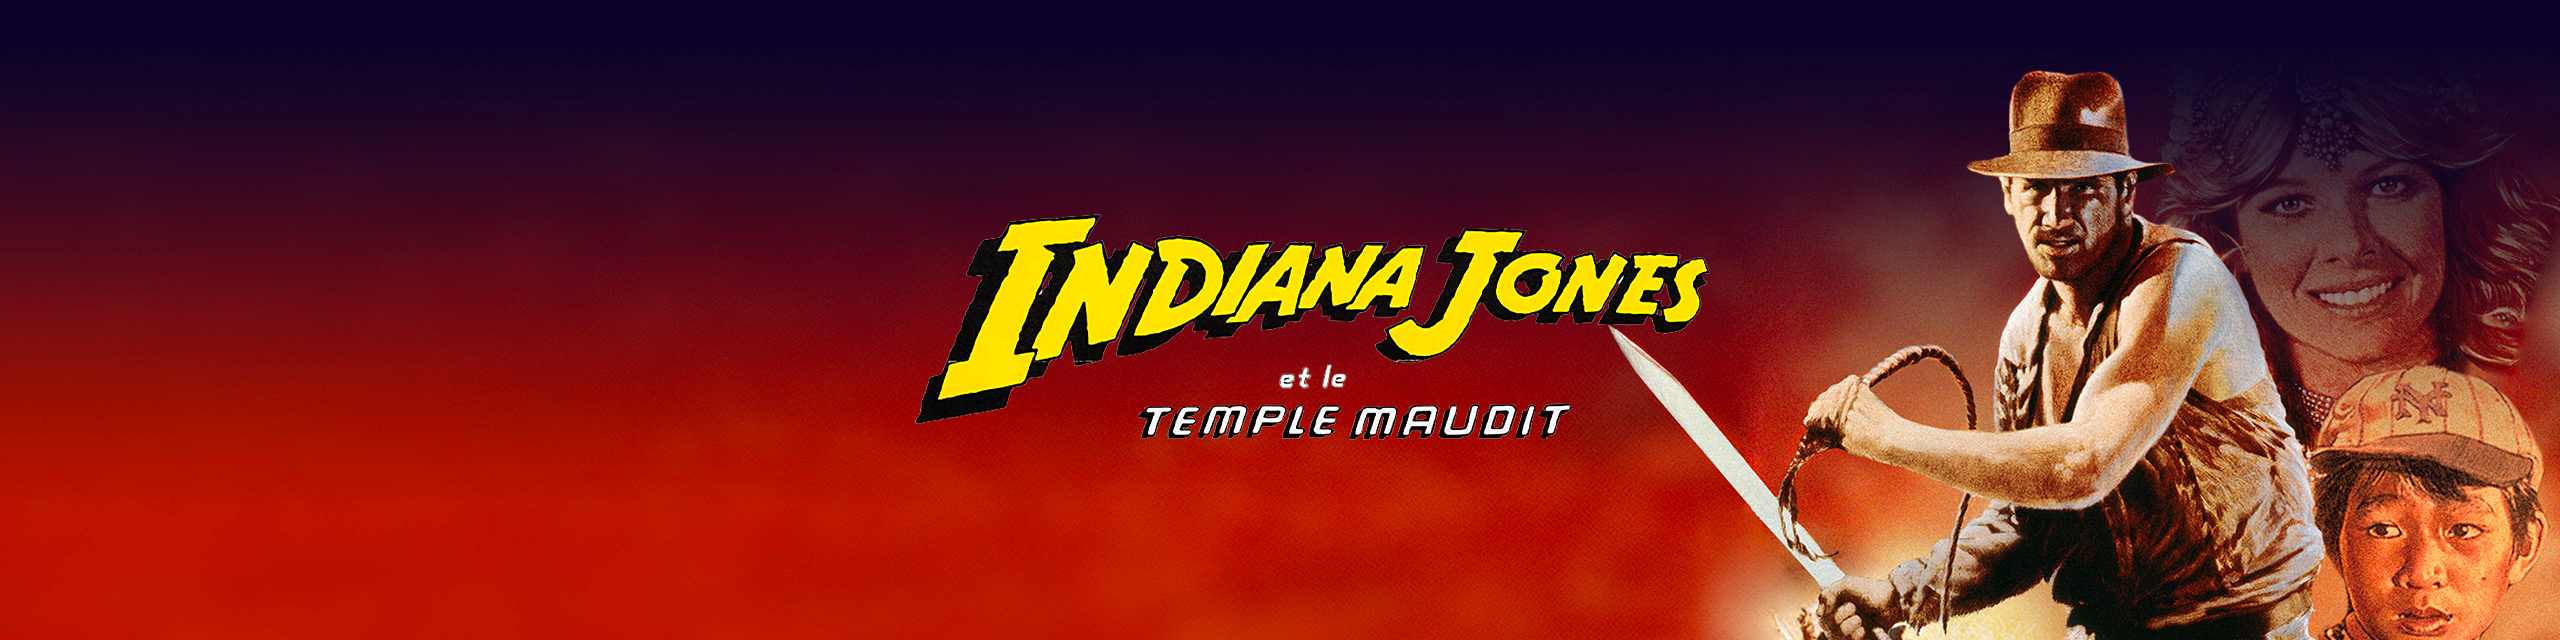 Indiana Jones streaming 6play